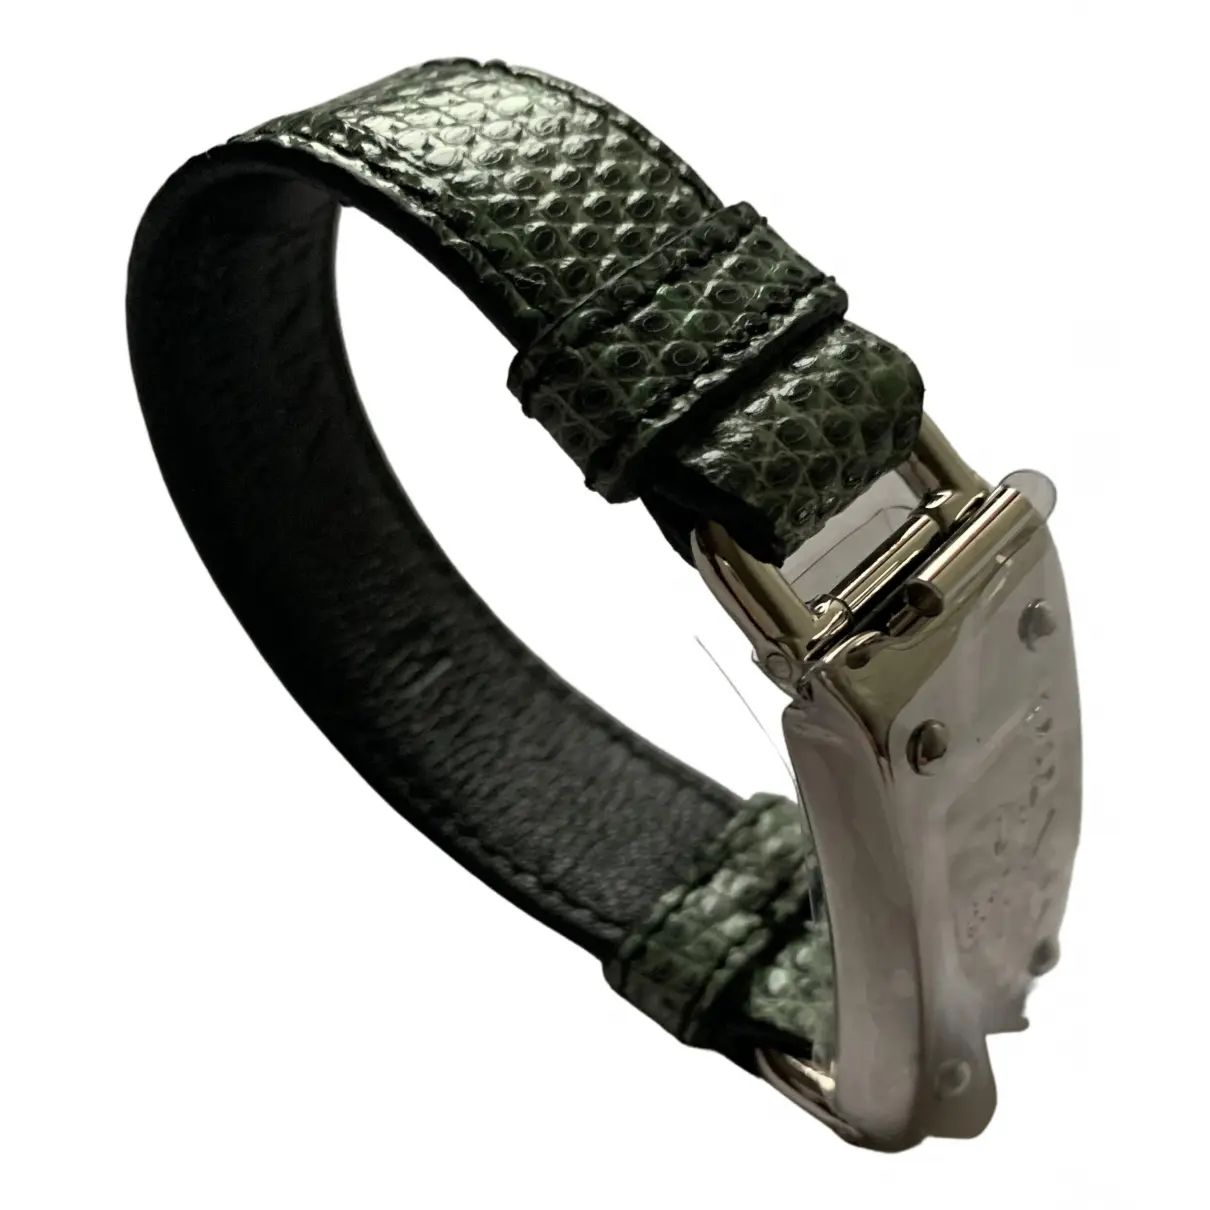 Leather bracelet Prada